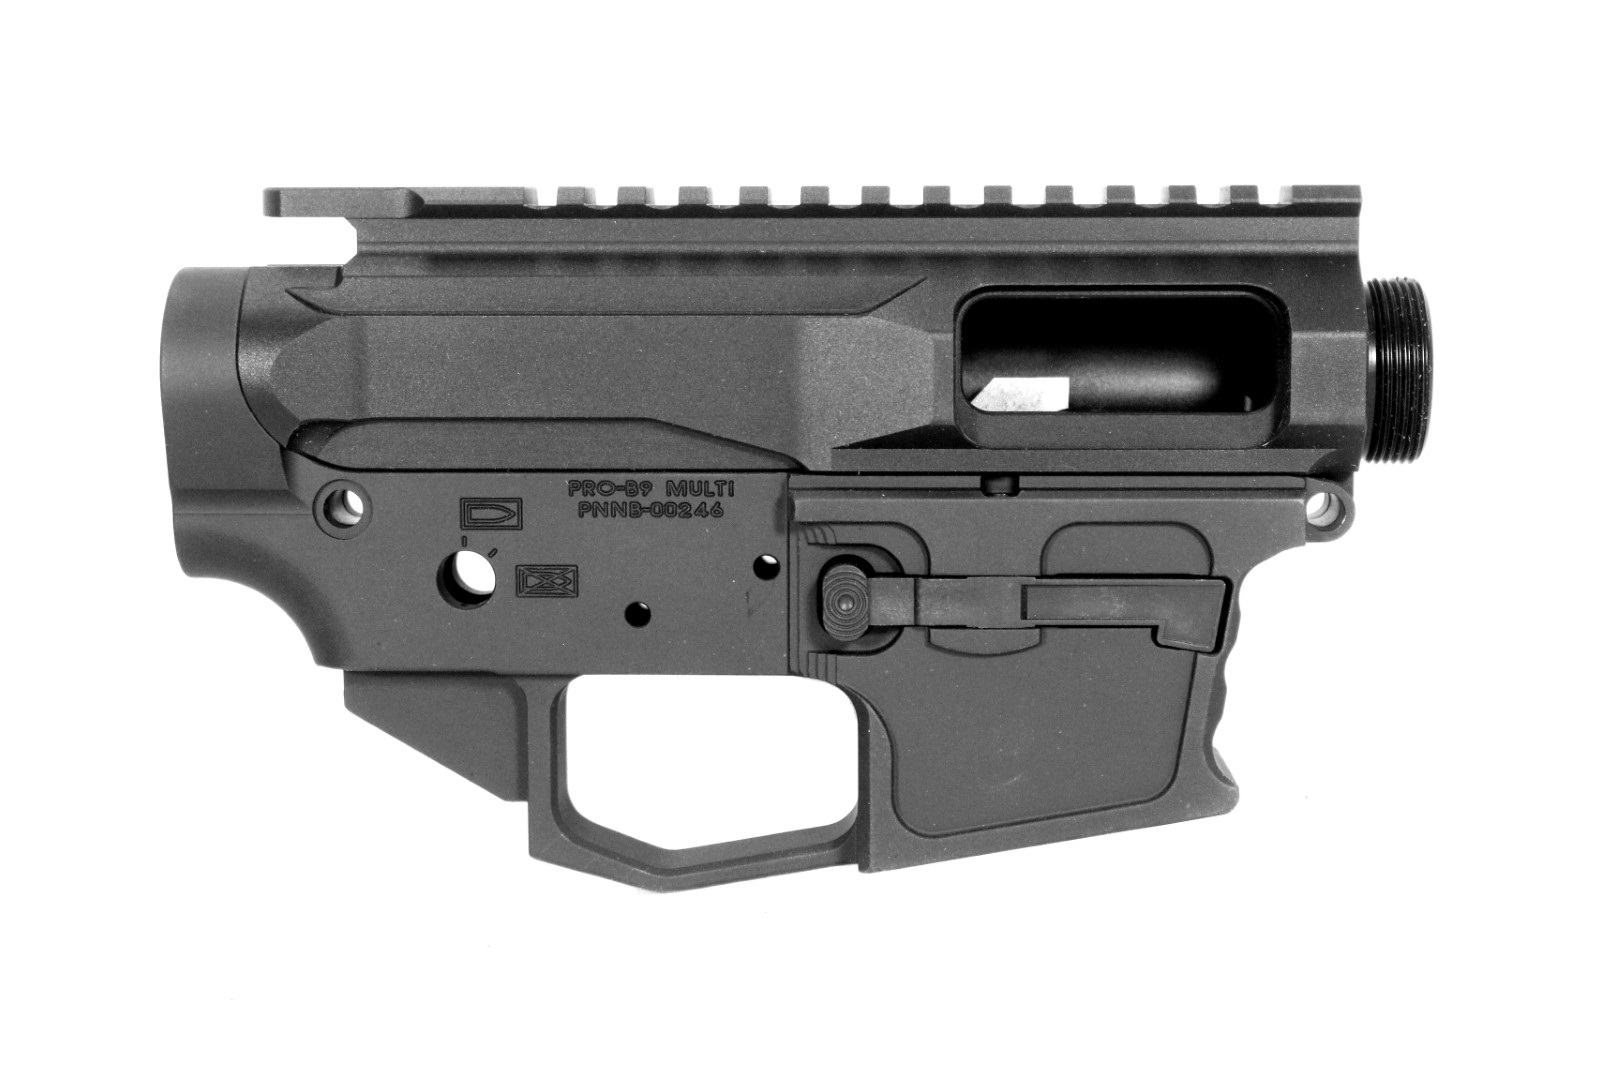 Pro2A AR-9 9mm / 40 S&W Stripped Billet Upper / Lower Receiver Set - Black